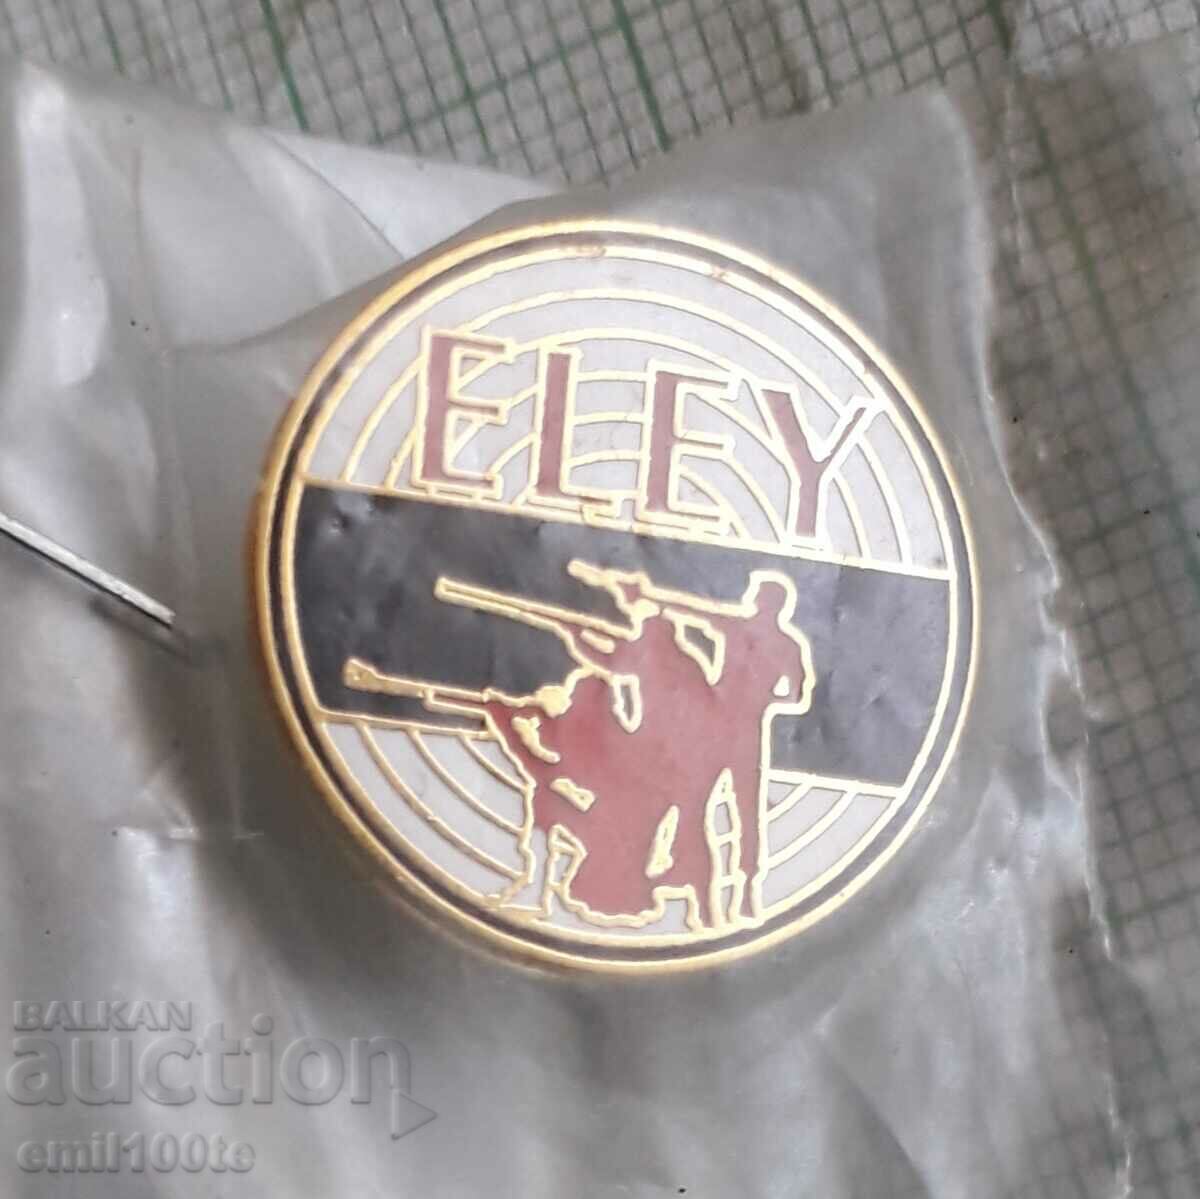 Badge - ELEY company for cartridges, etc.